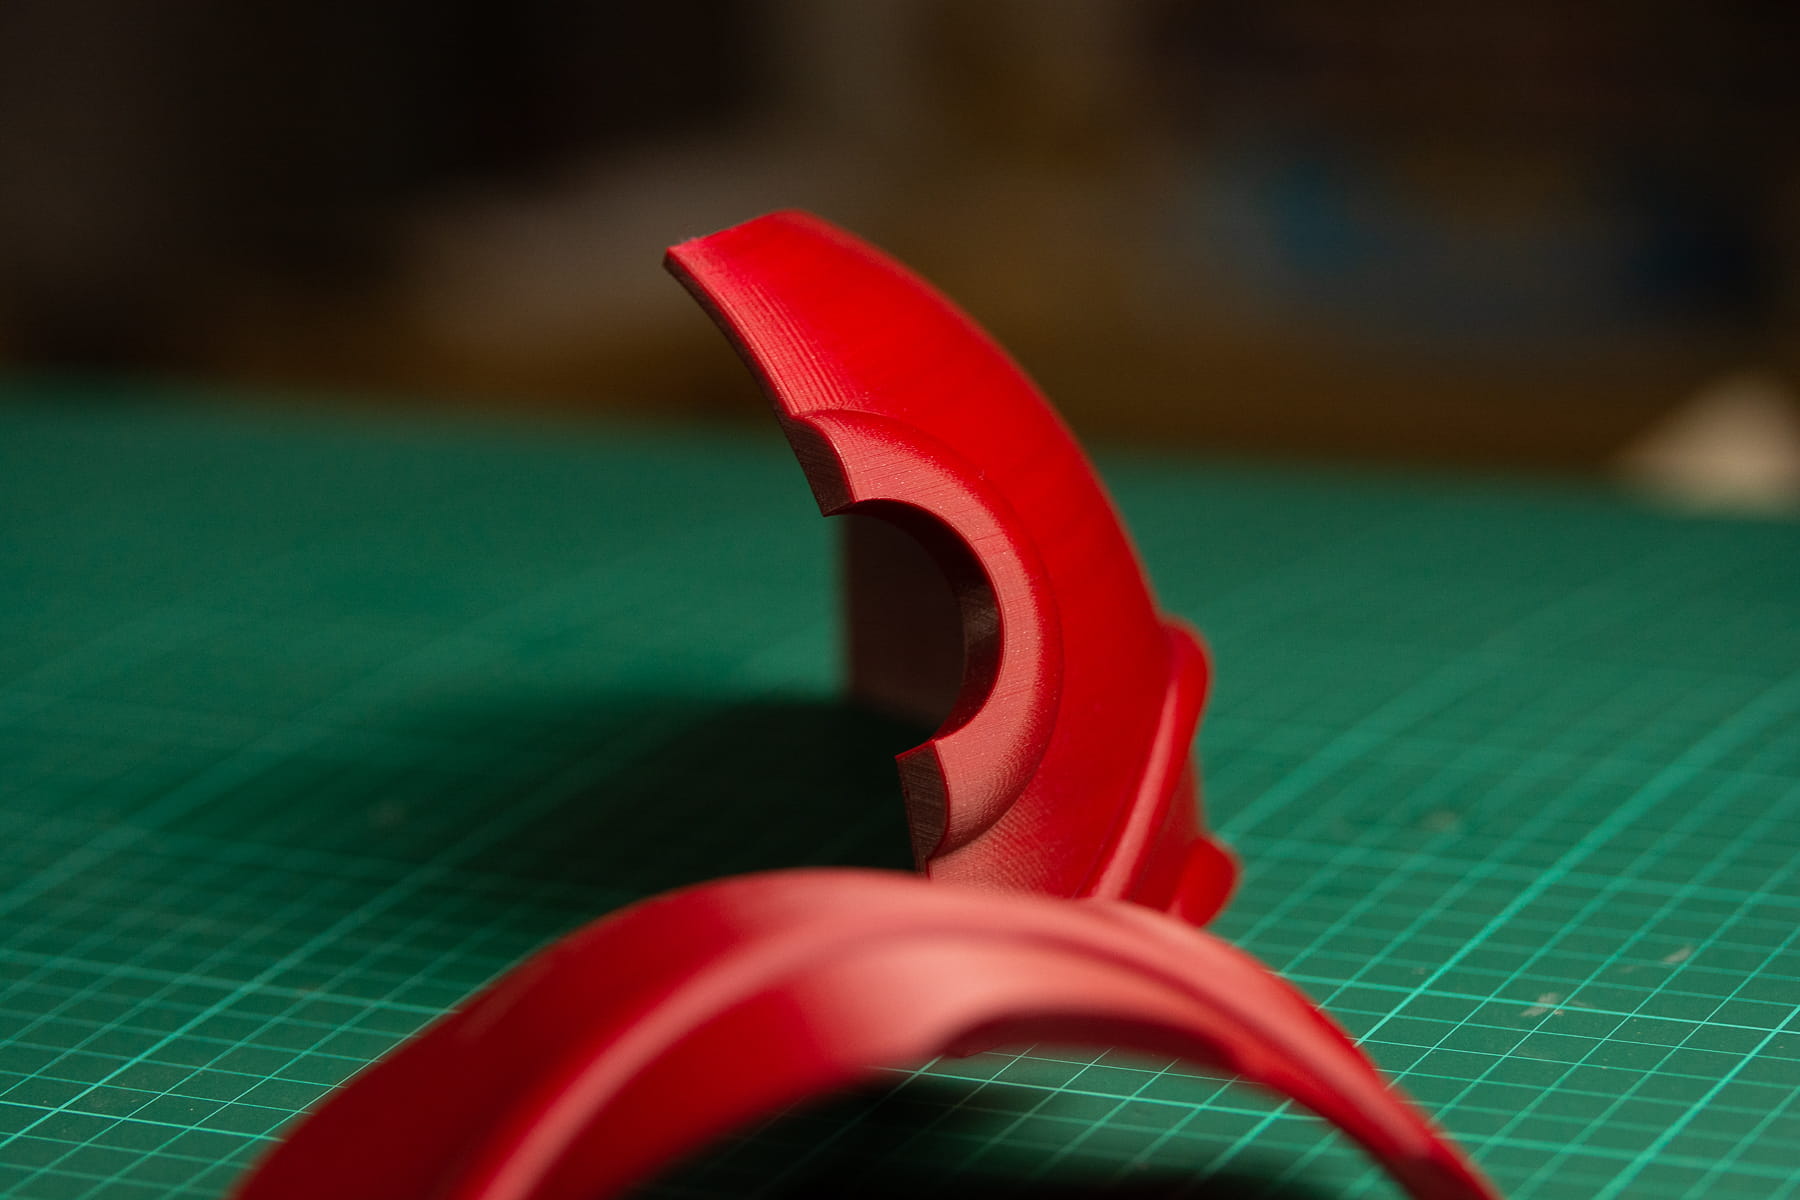 OWL-Filament Premium 3D PLA Filament 1kg 1,75mm Made in Germany 3kg / 1x 1kg Schwarz/Rot/Weiß 